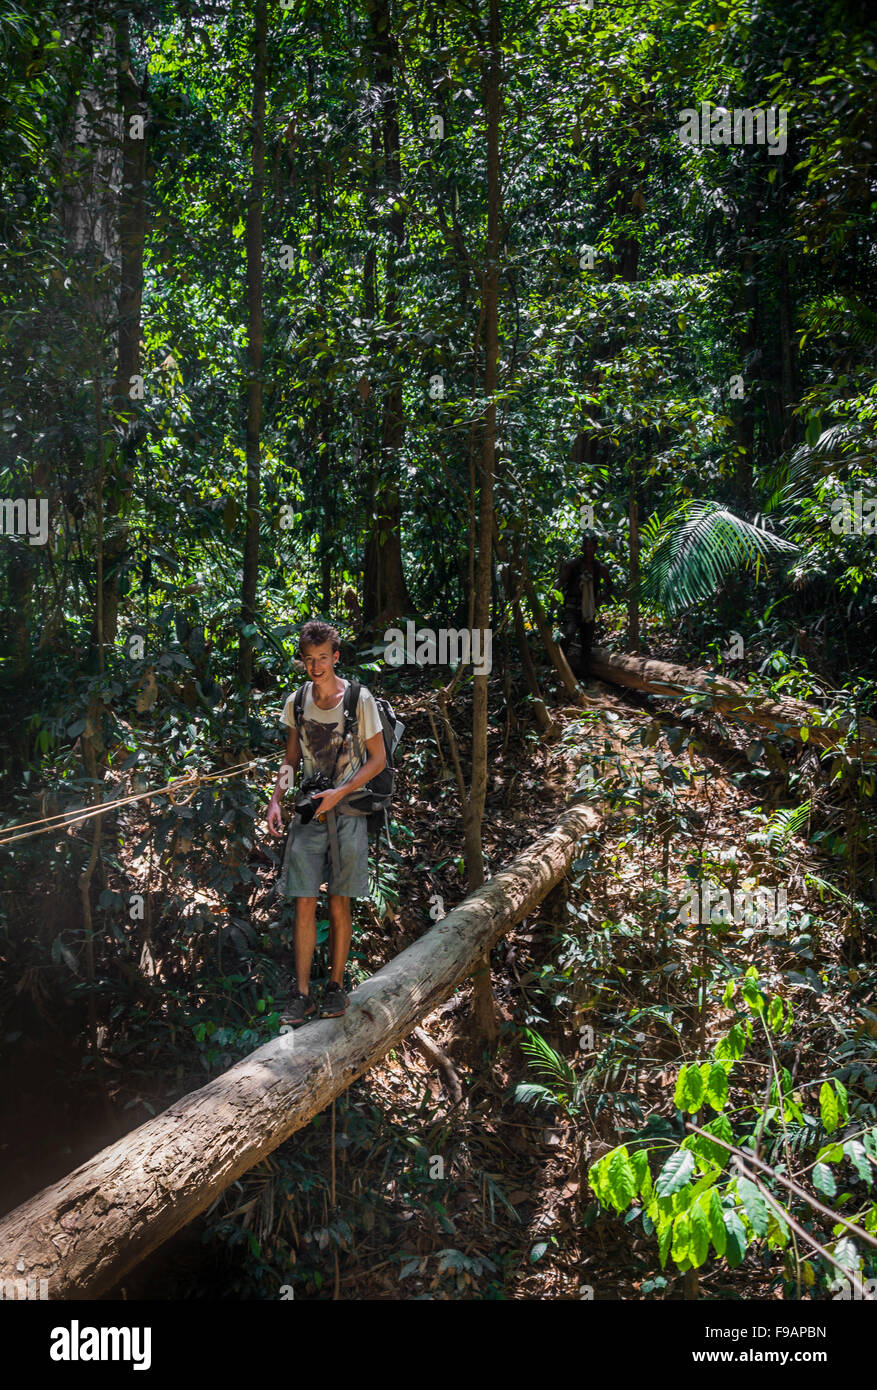 Hiker, young man balancing on tree trunk in jungle, Kuala Tahan, Taman Negara, Malaysia Stock Photo